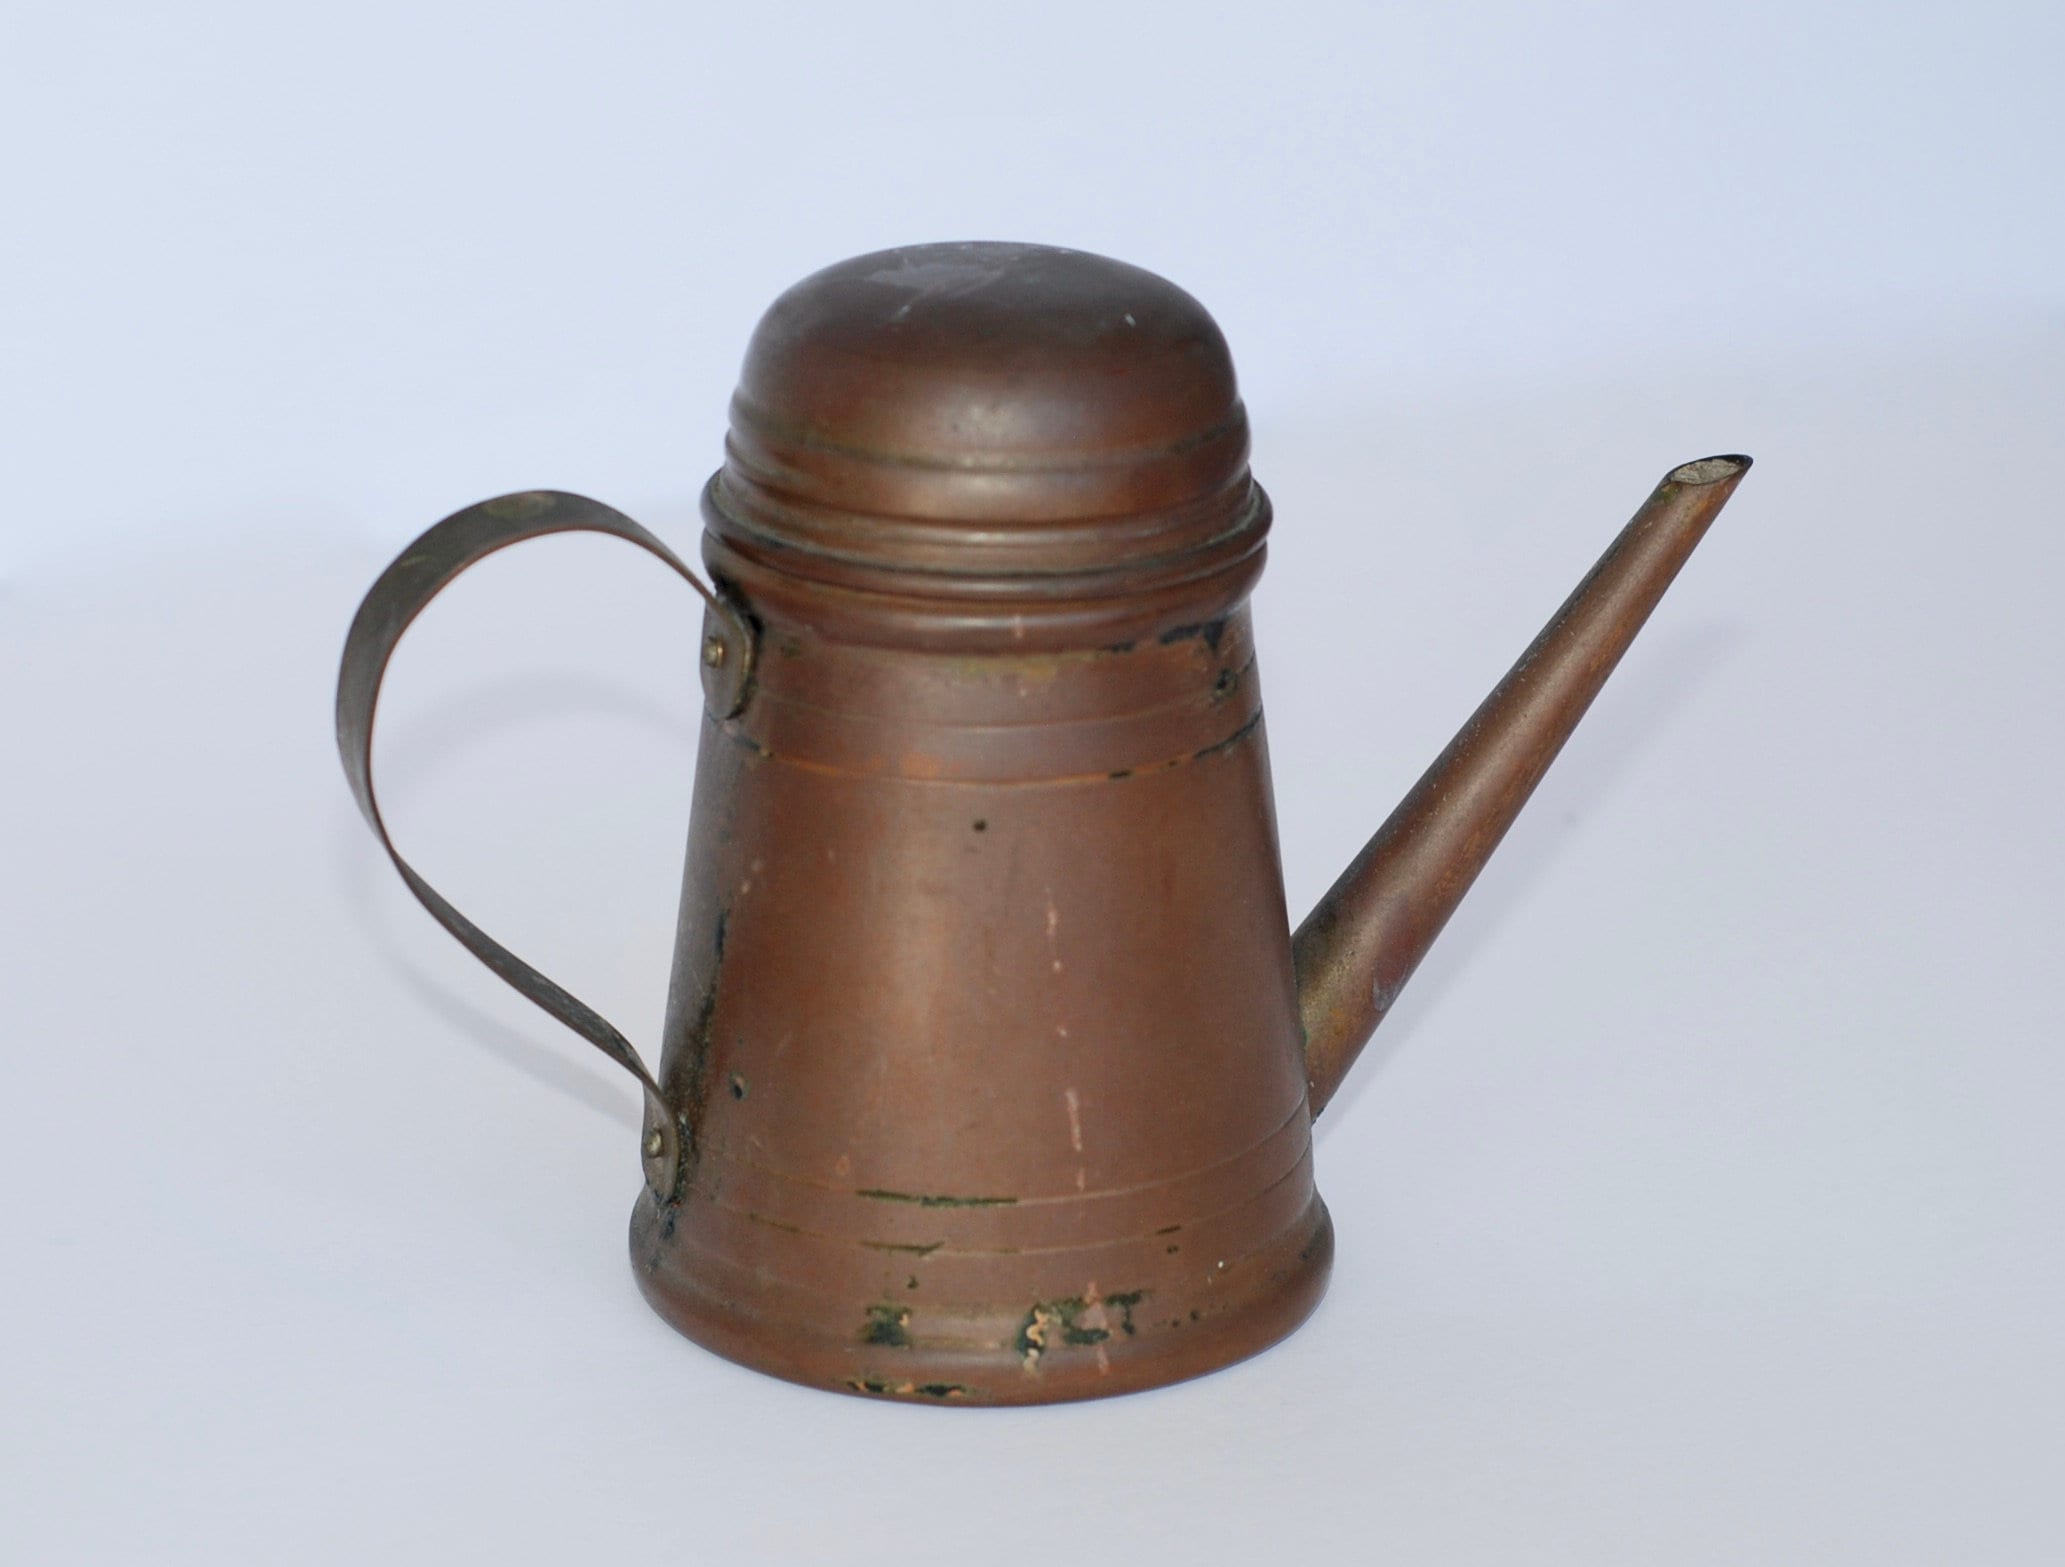 Rustic Copper Antique Chocolate Pot with Brass Handle Made in Korea O.D.I Teapot Farmhouse Decor Primitive Coffee Water Rare